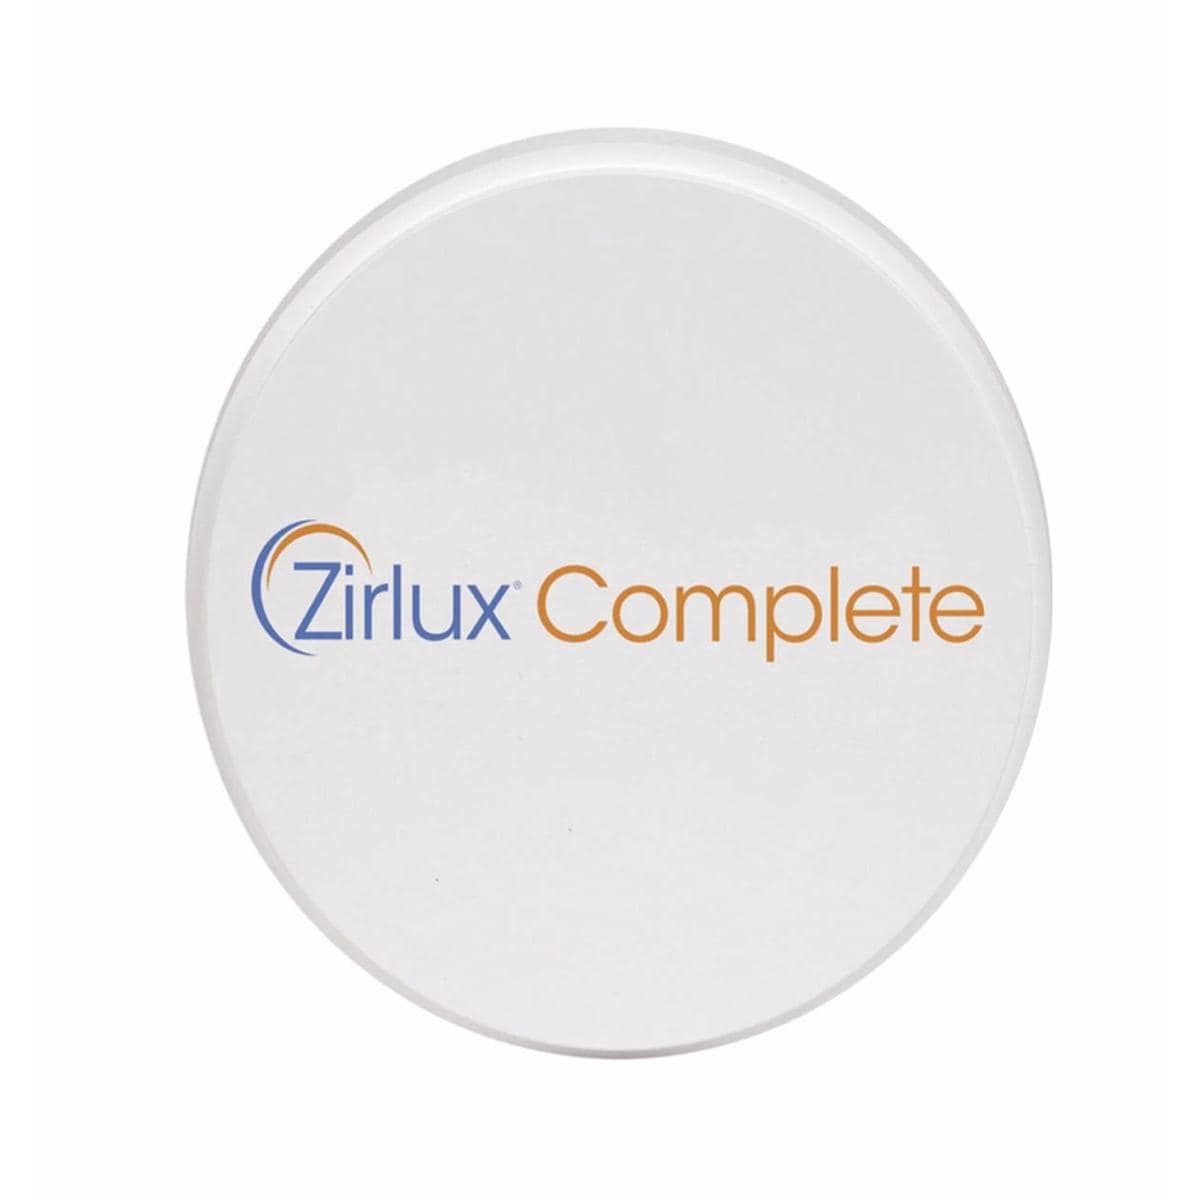 Zirlux Complete A3.5 98.5x10mm